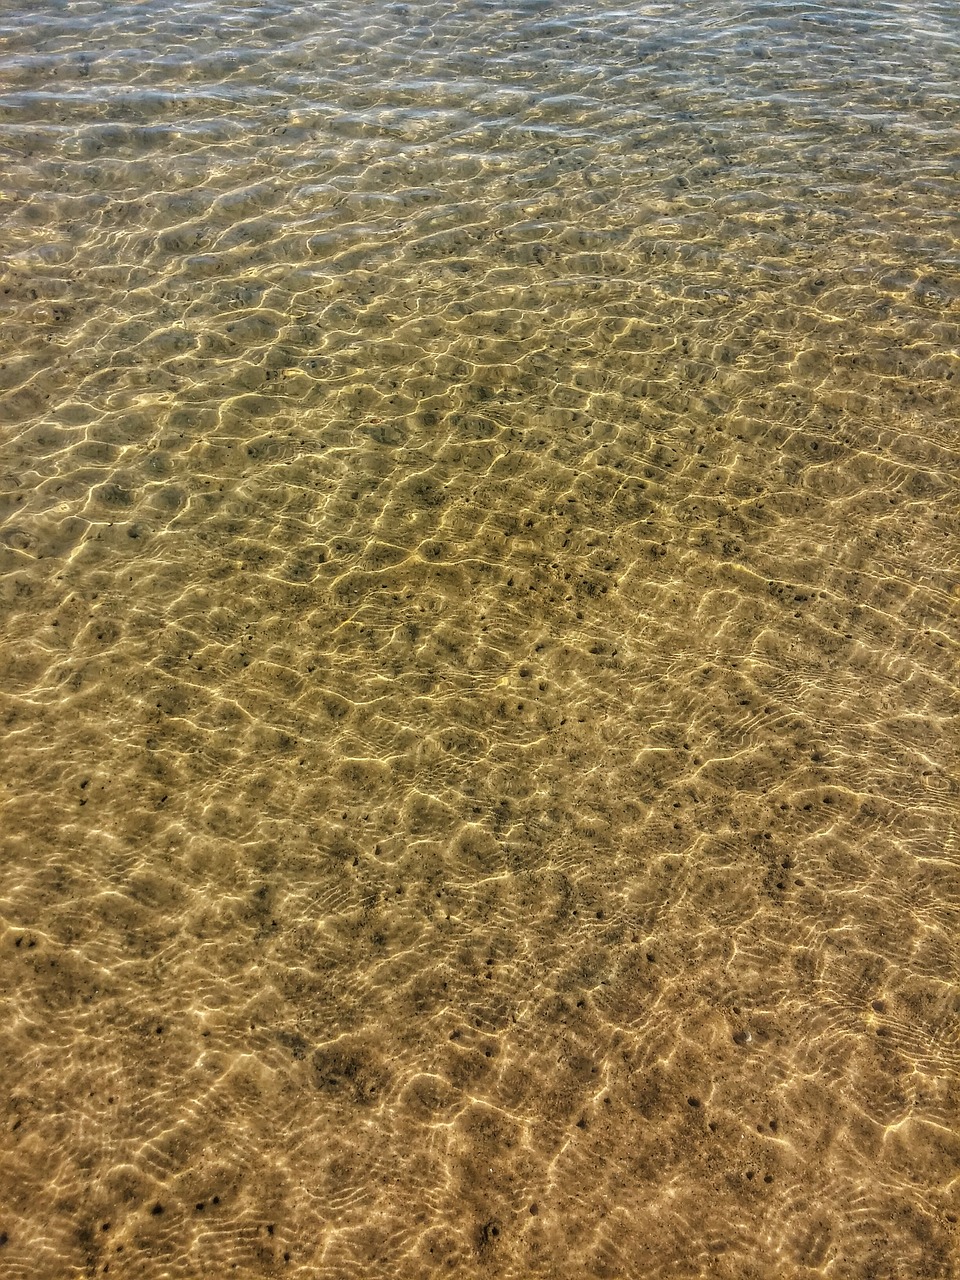 water sand still free photo